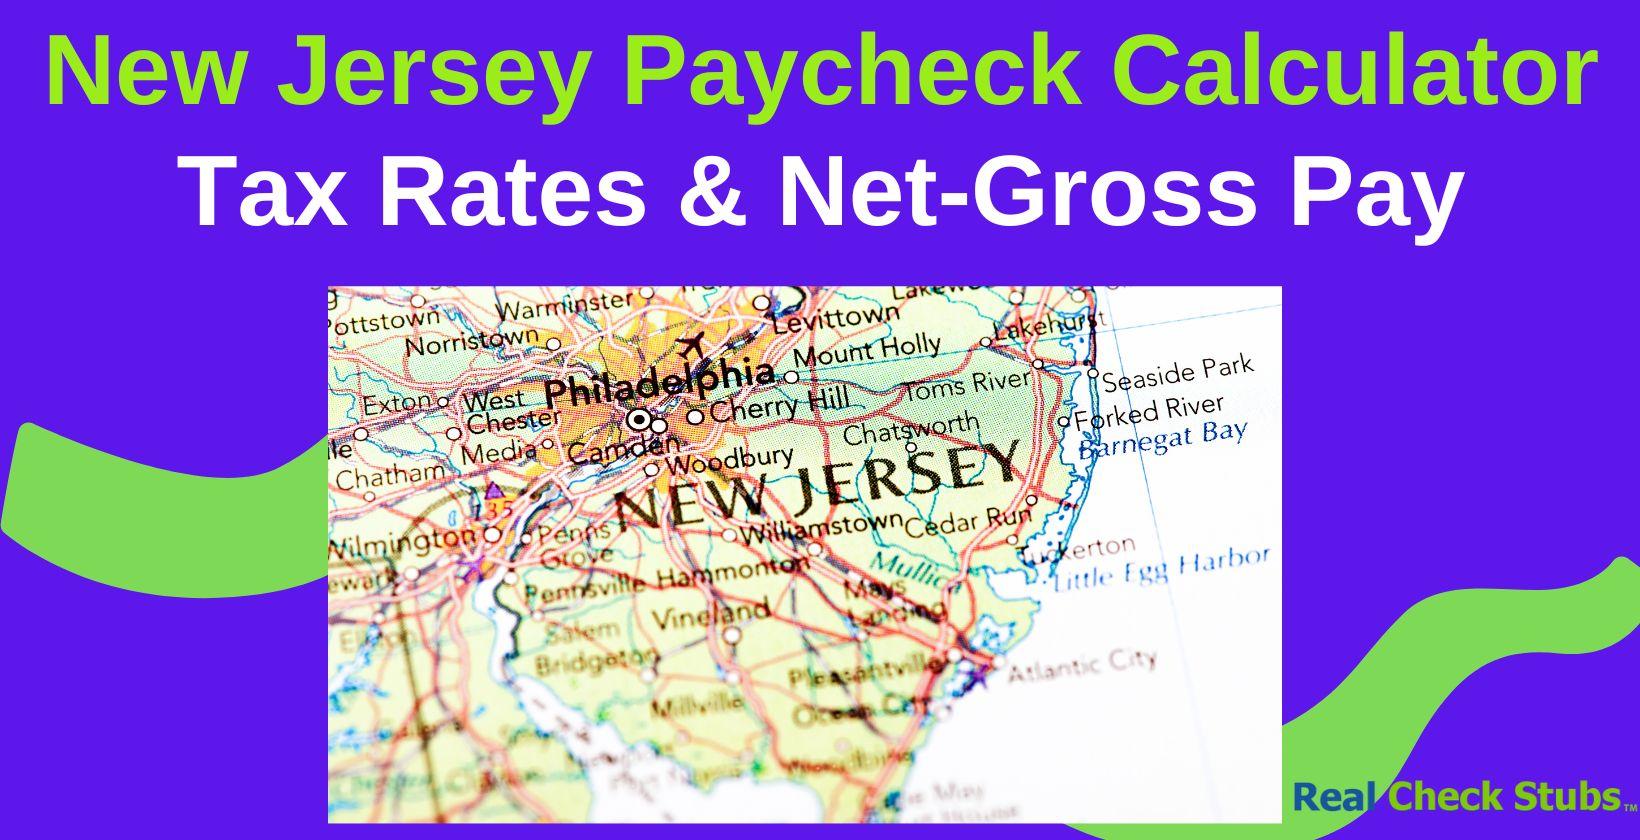 New Jersey Paycheck Calculator